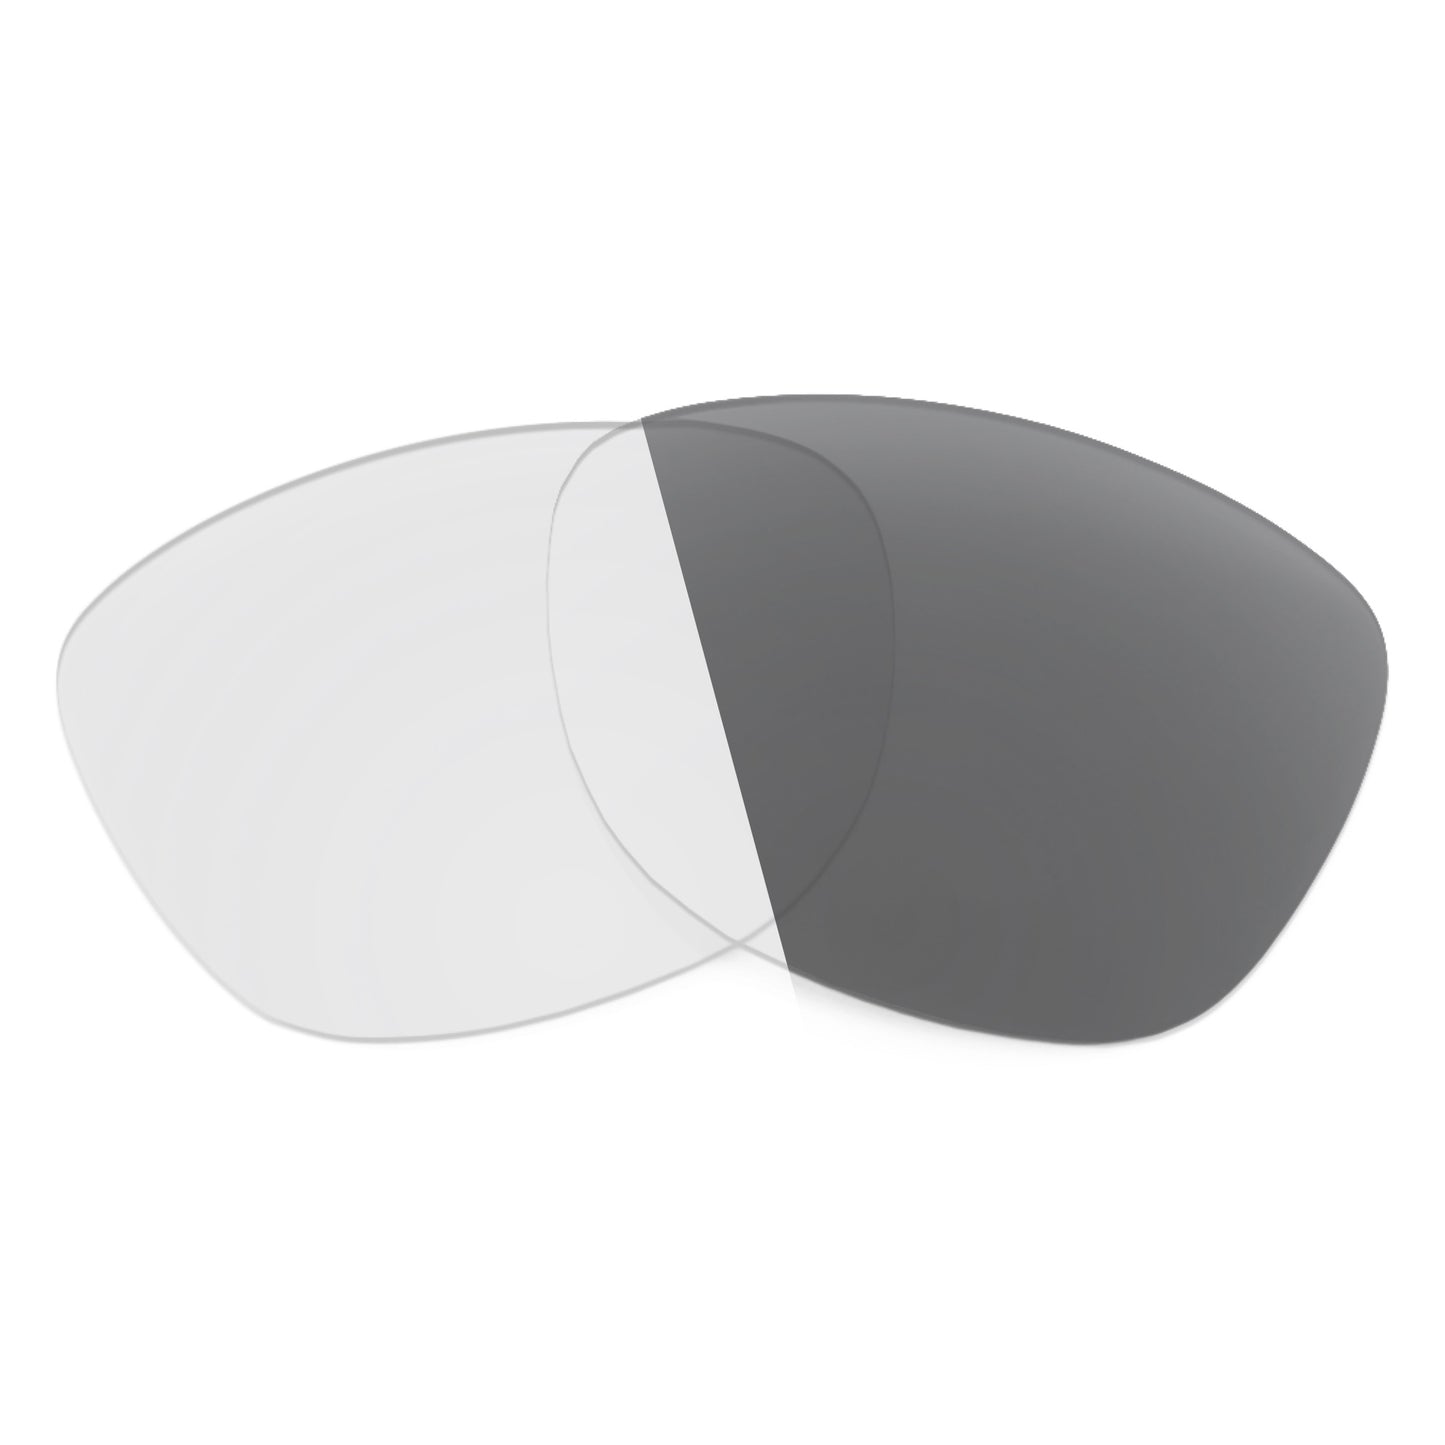 Revant replacement lenses for Oakley Discreet Non-Polarized Adapt Gray Photochromic